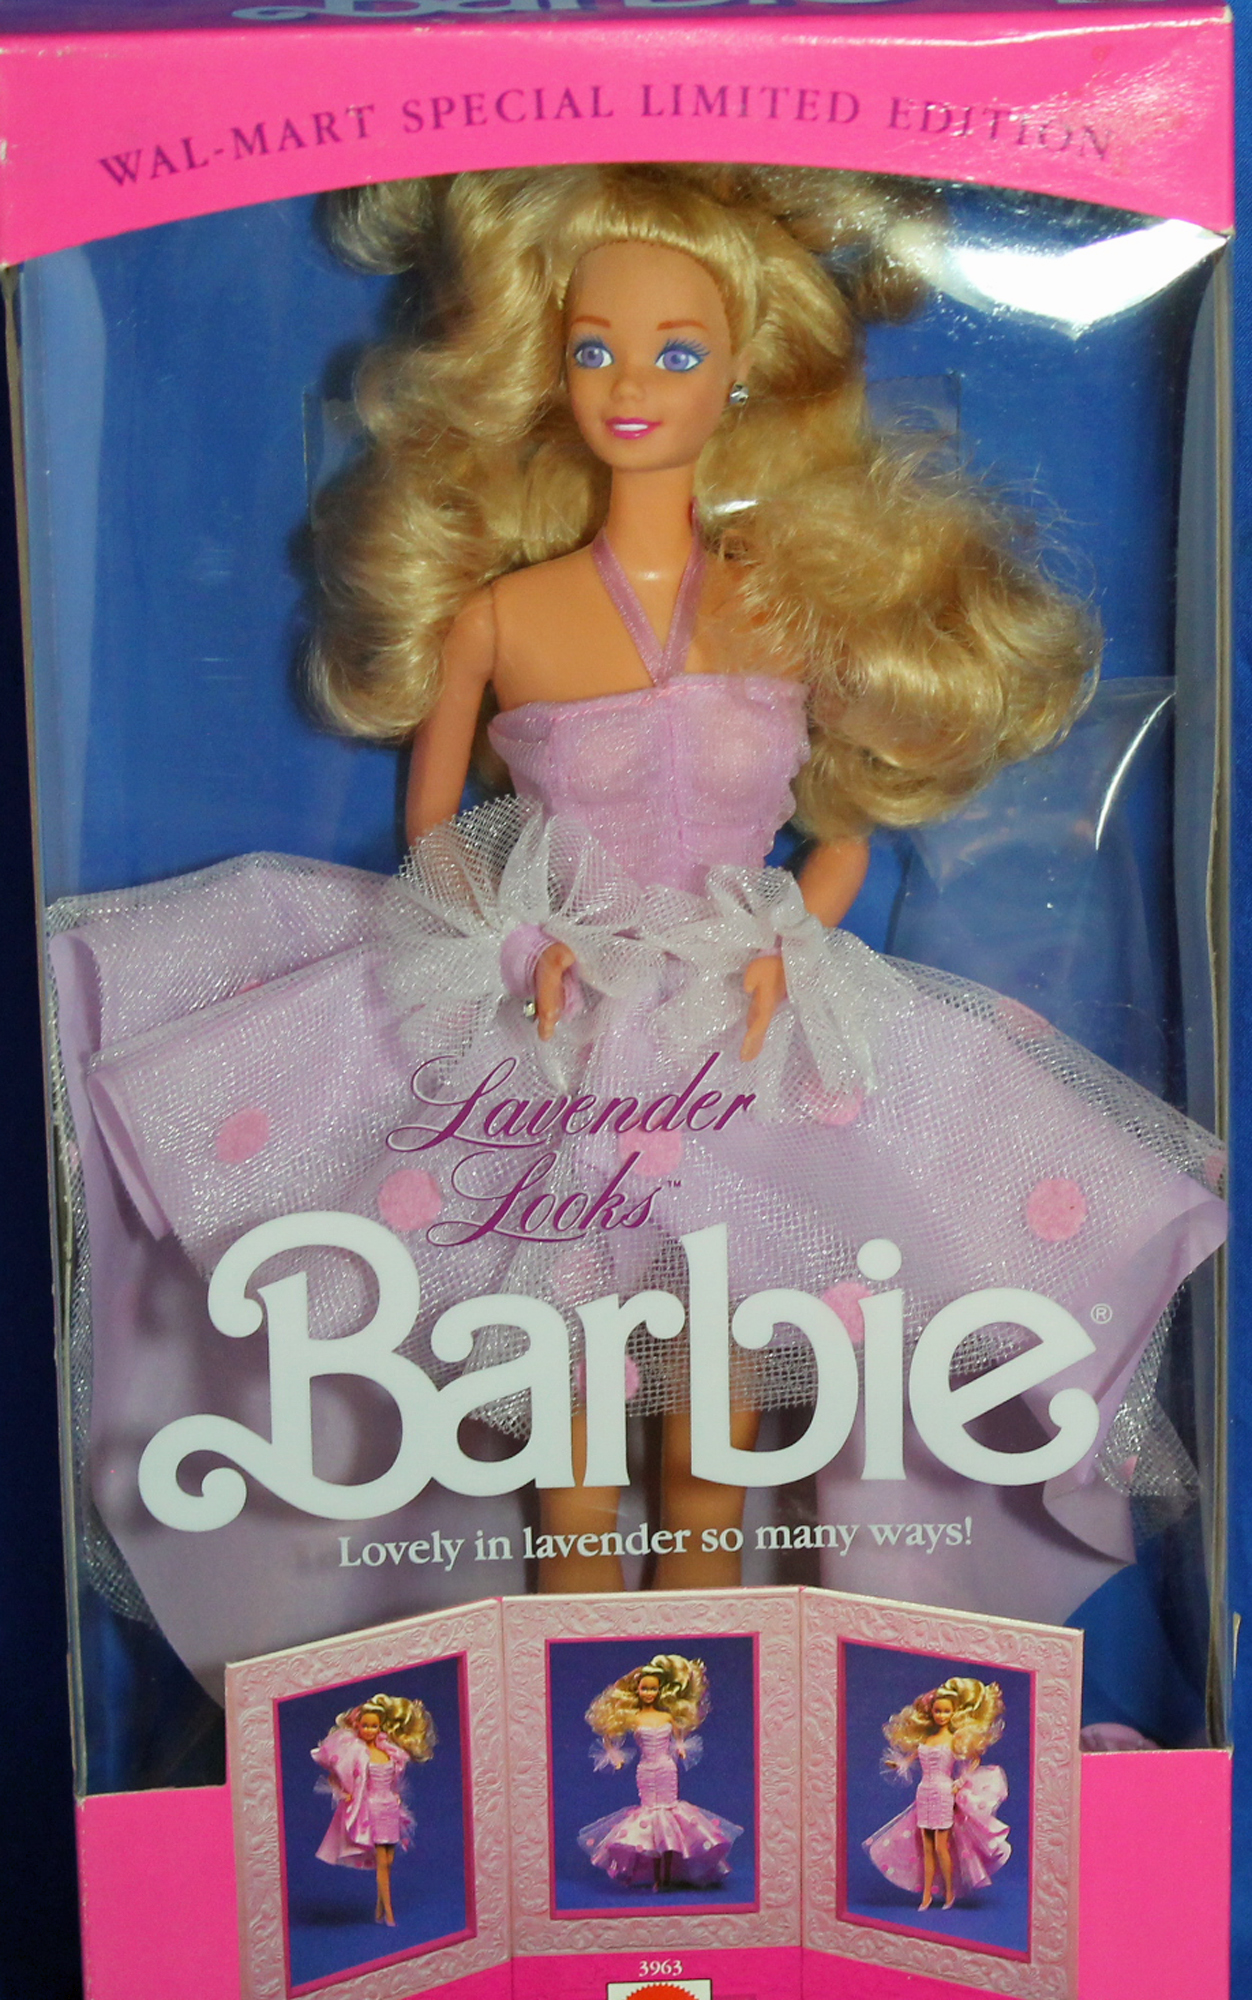 Barbie 3963 MIB 1989 Walmart Lavender Looks Doll | eBay